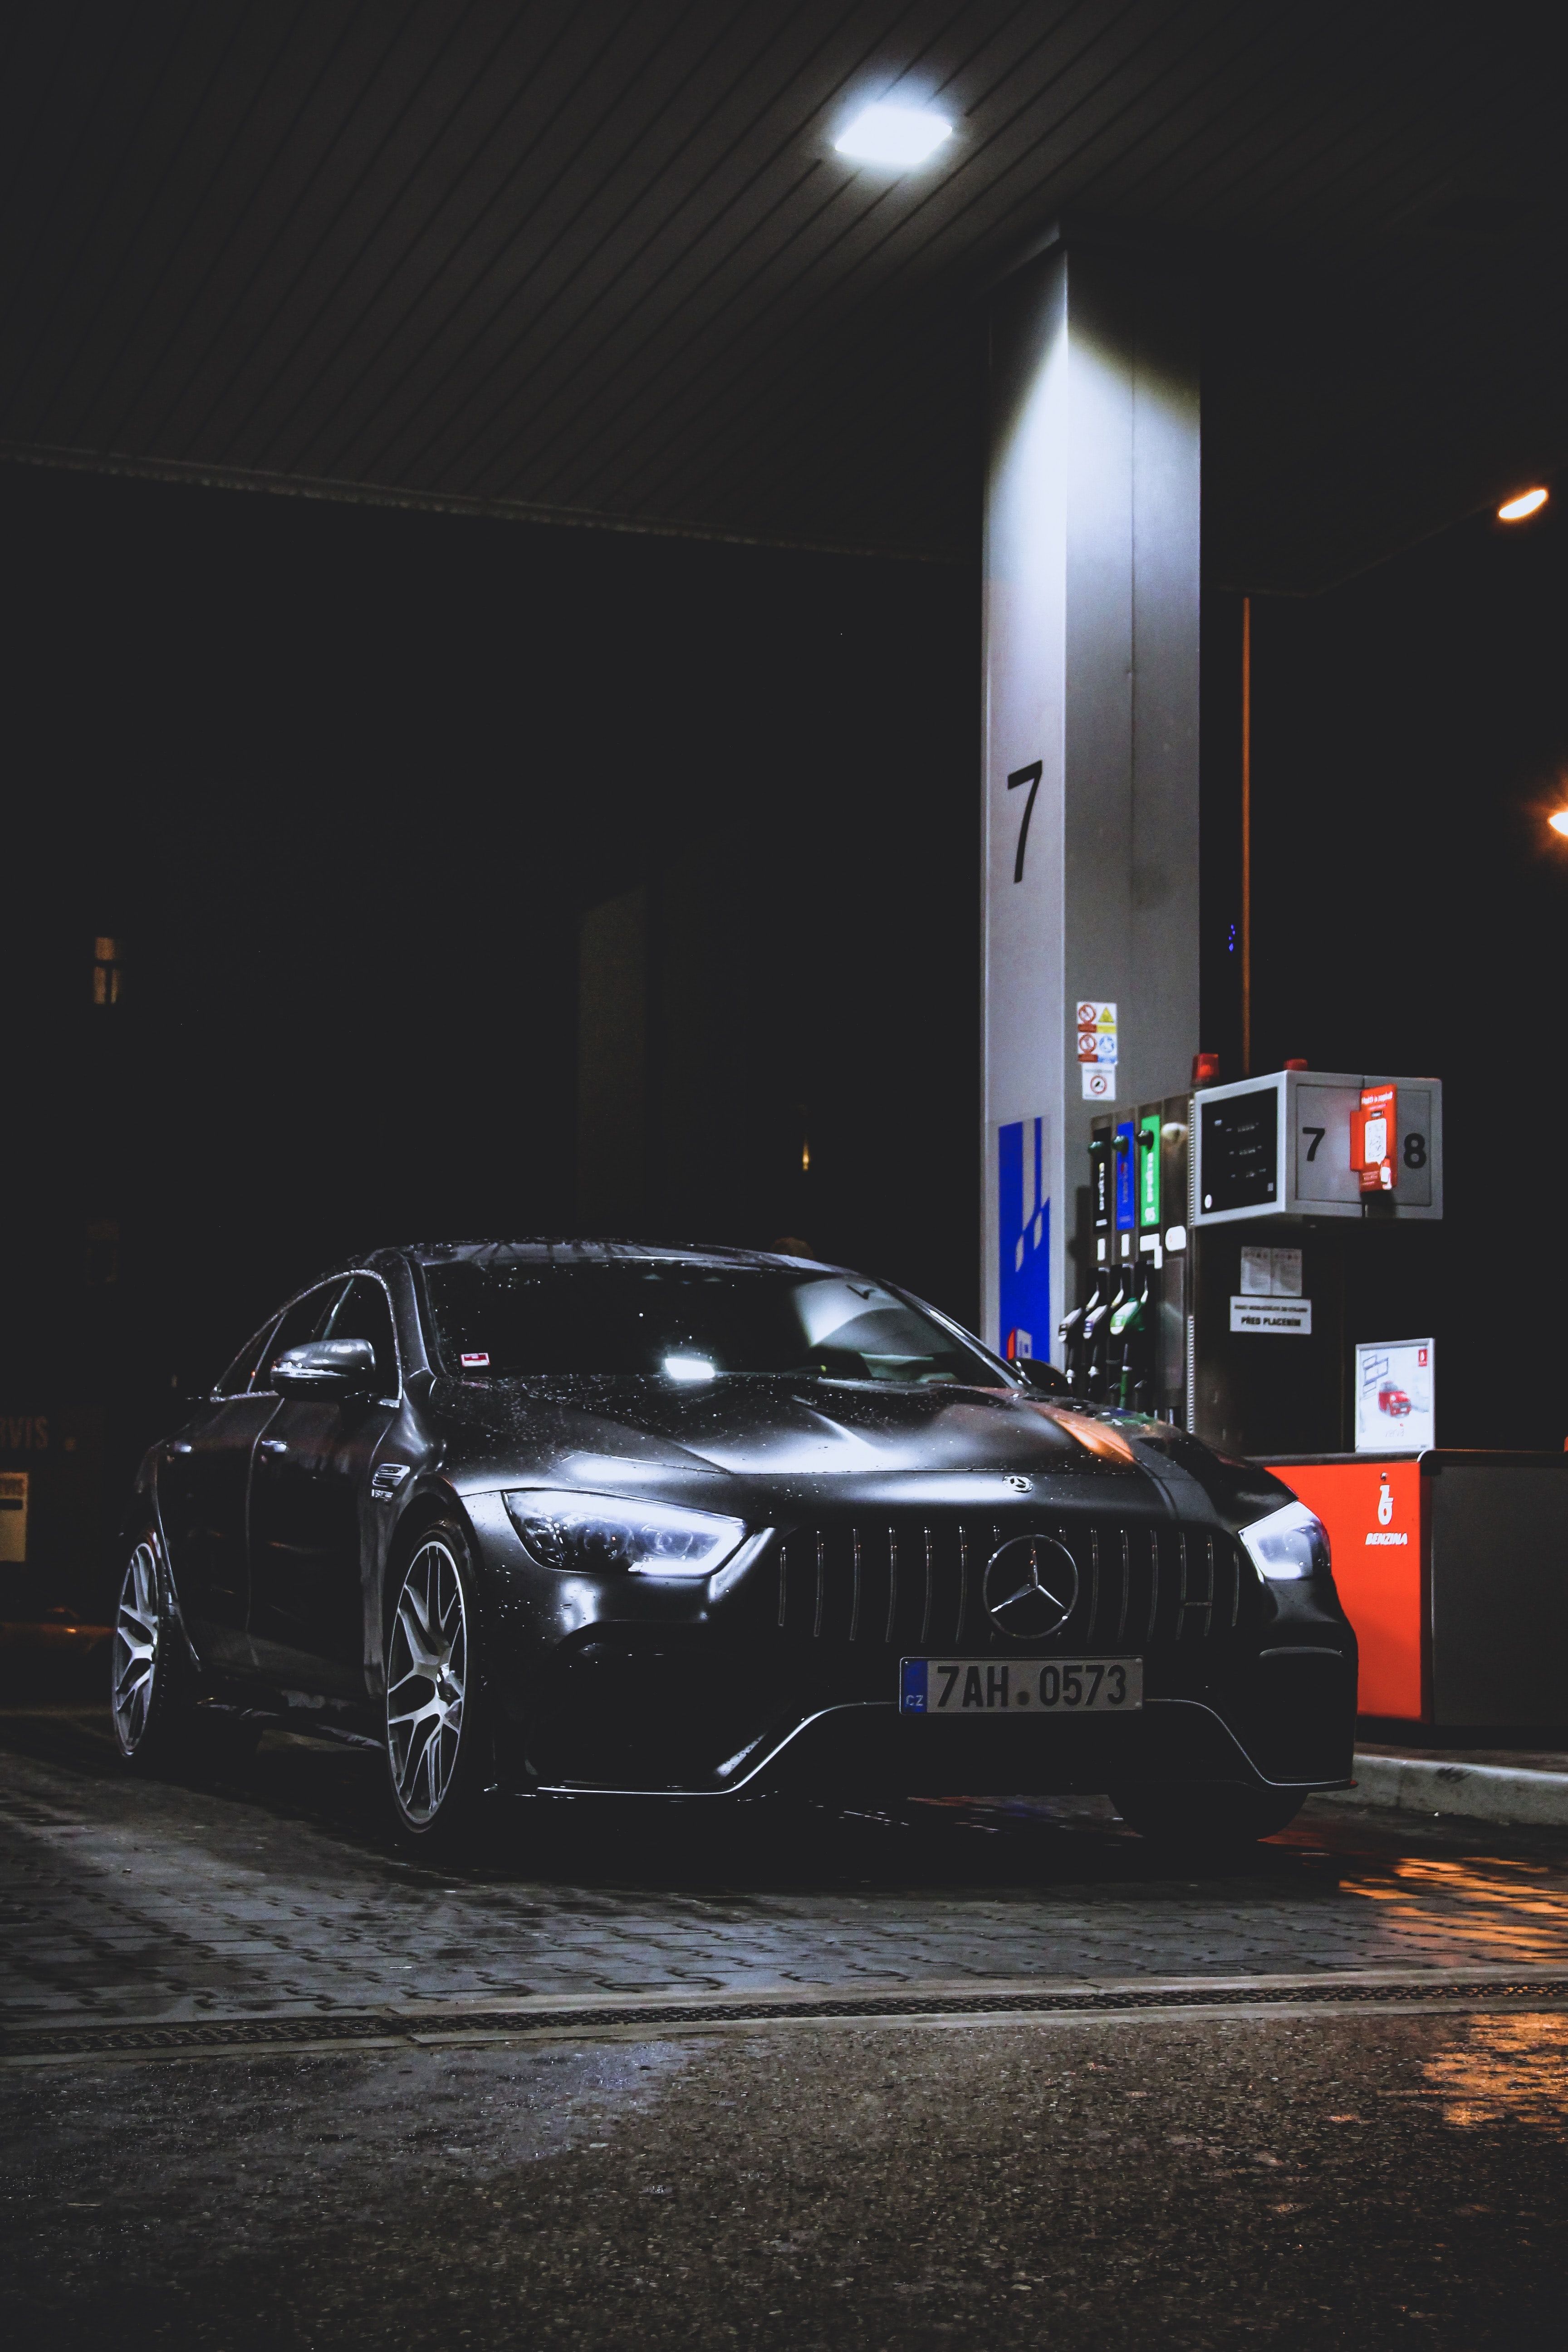 Black Mercedes Benz Car At Gas Station At Night Cars. Mercedes Benz Wallpaper, Mercedes Benz Cars, Benz Car